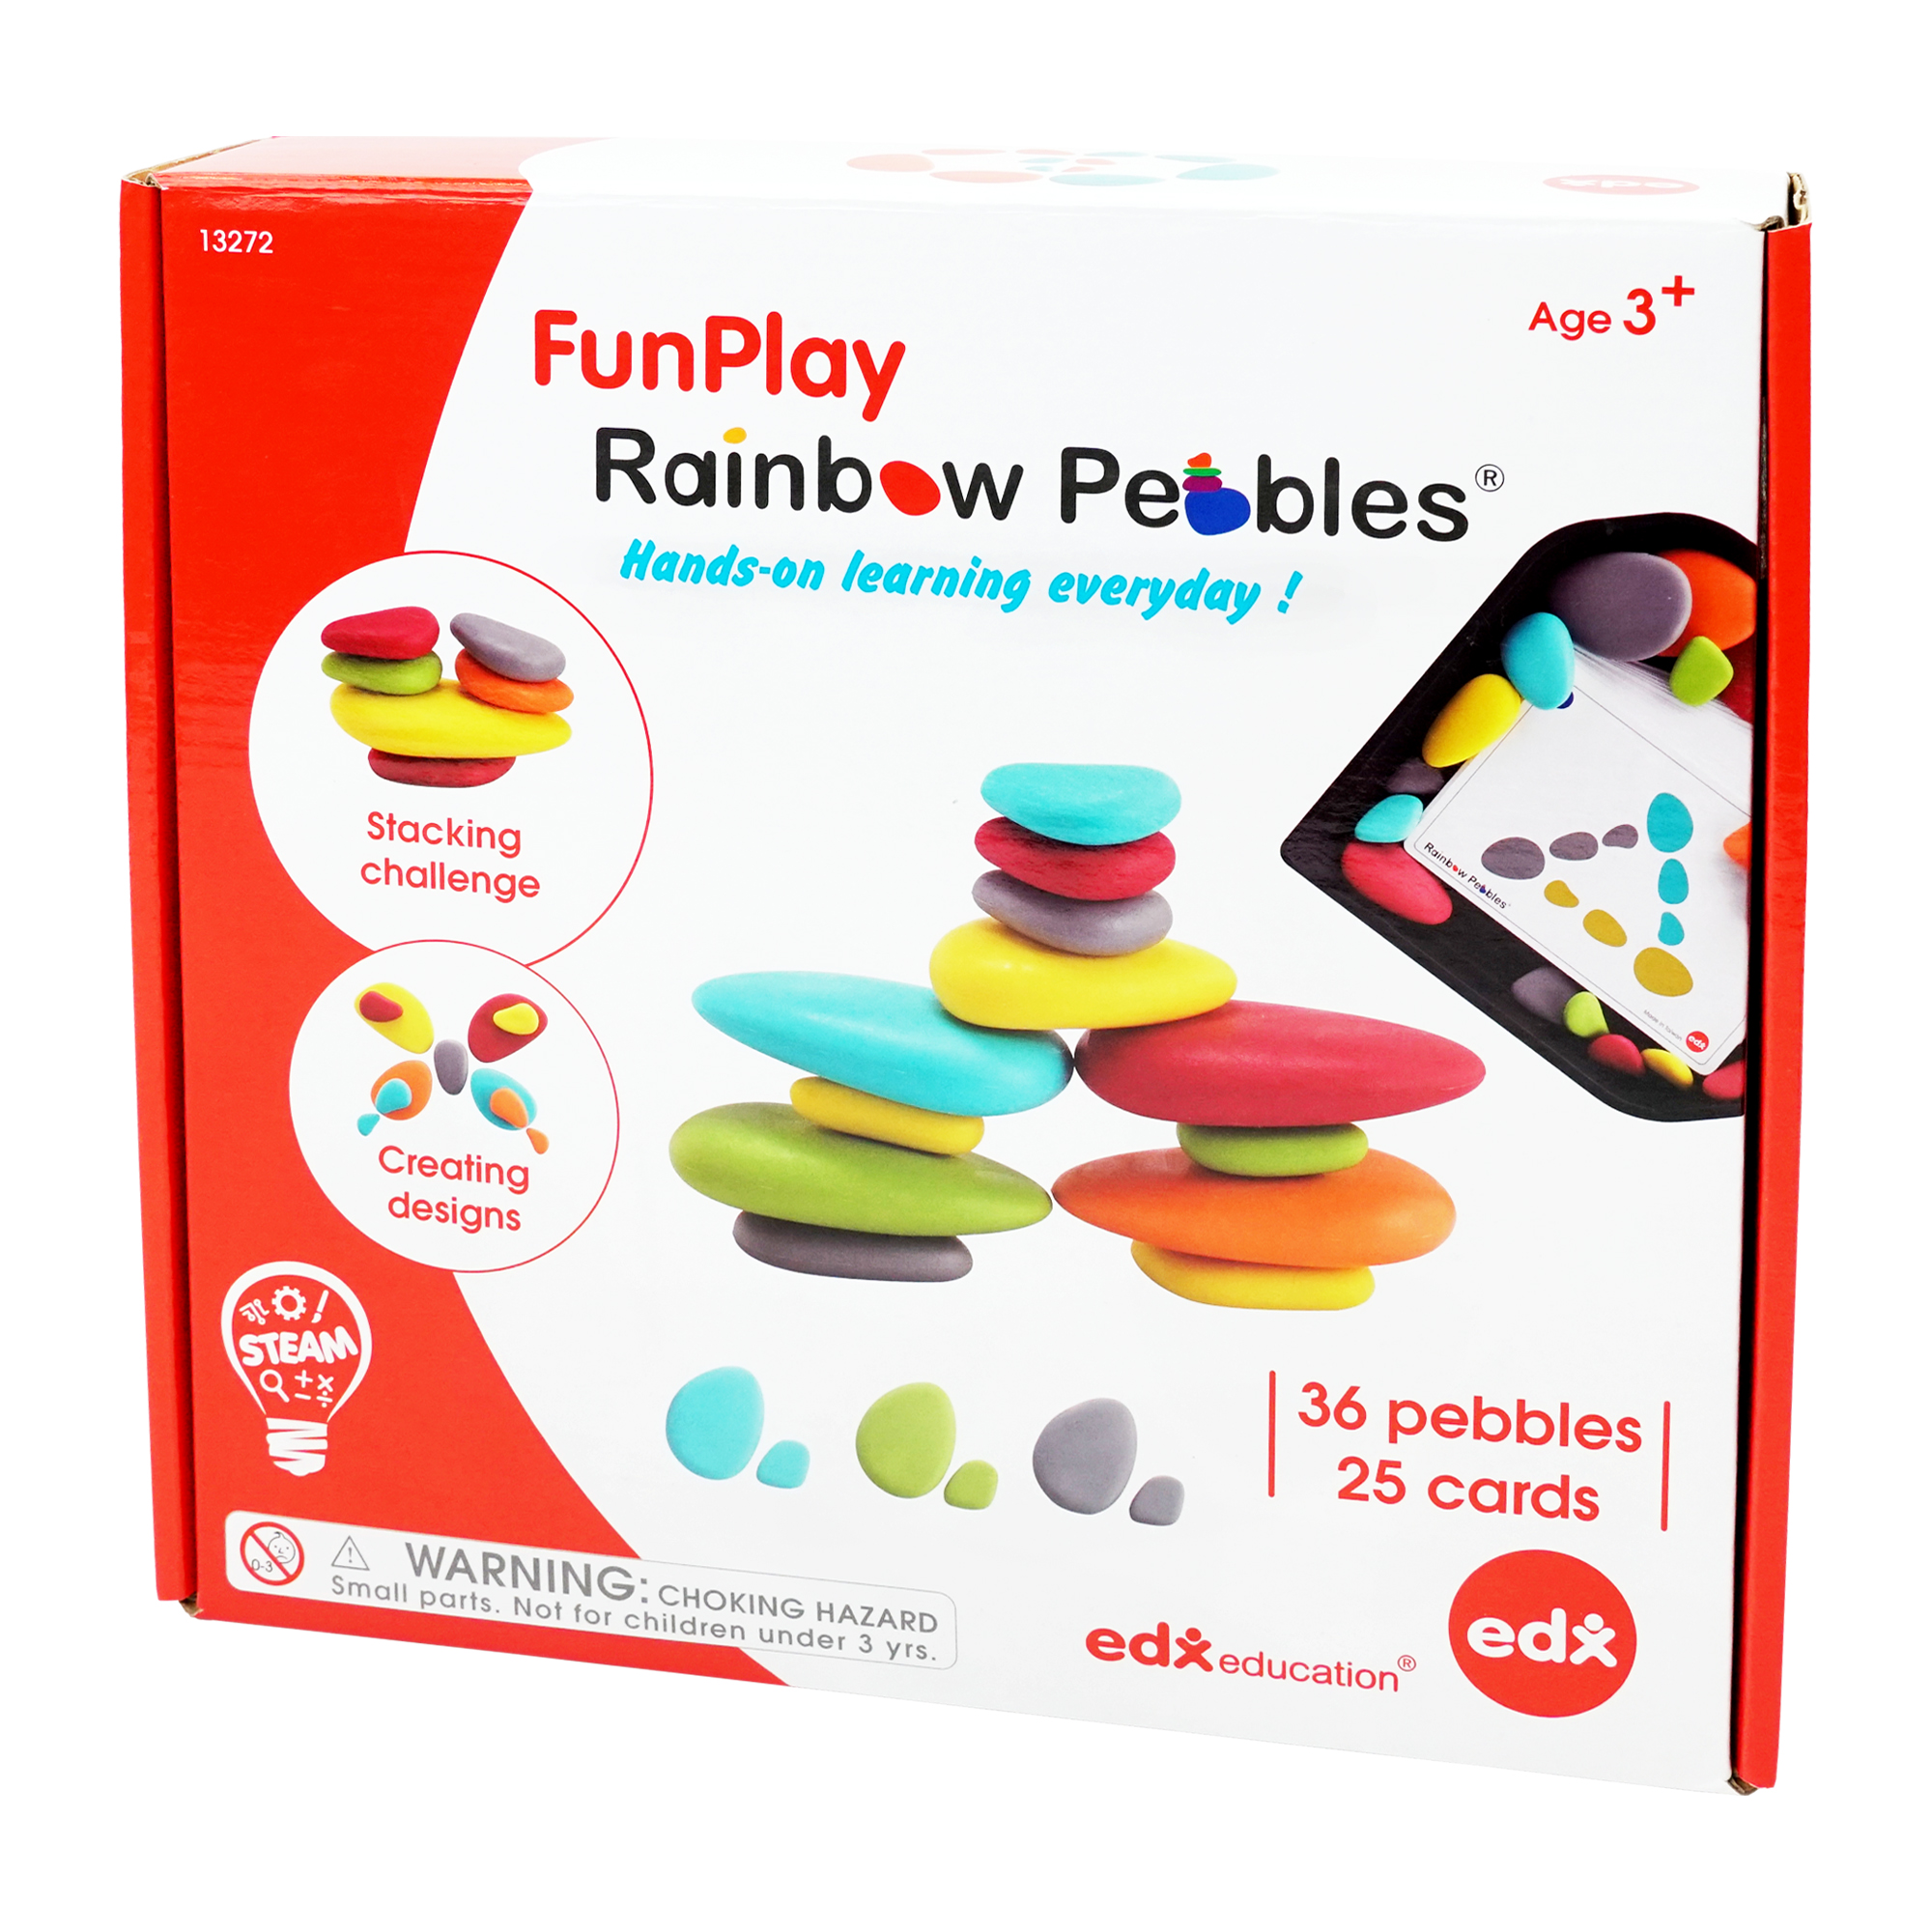 Fun Play Rainbow Pebbles